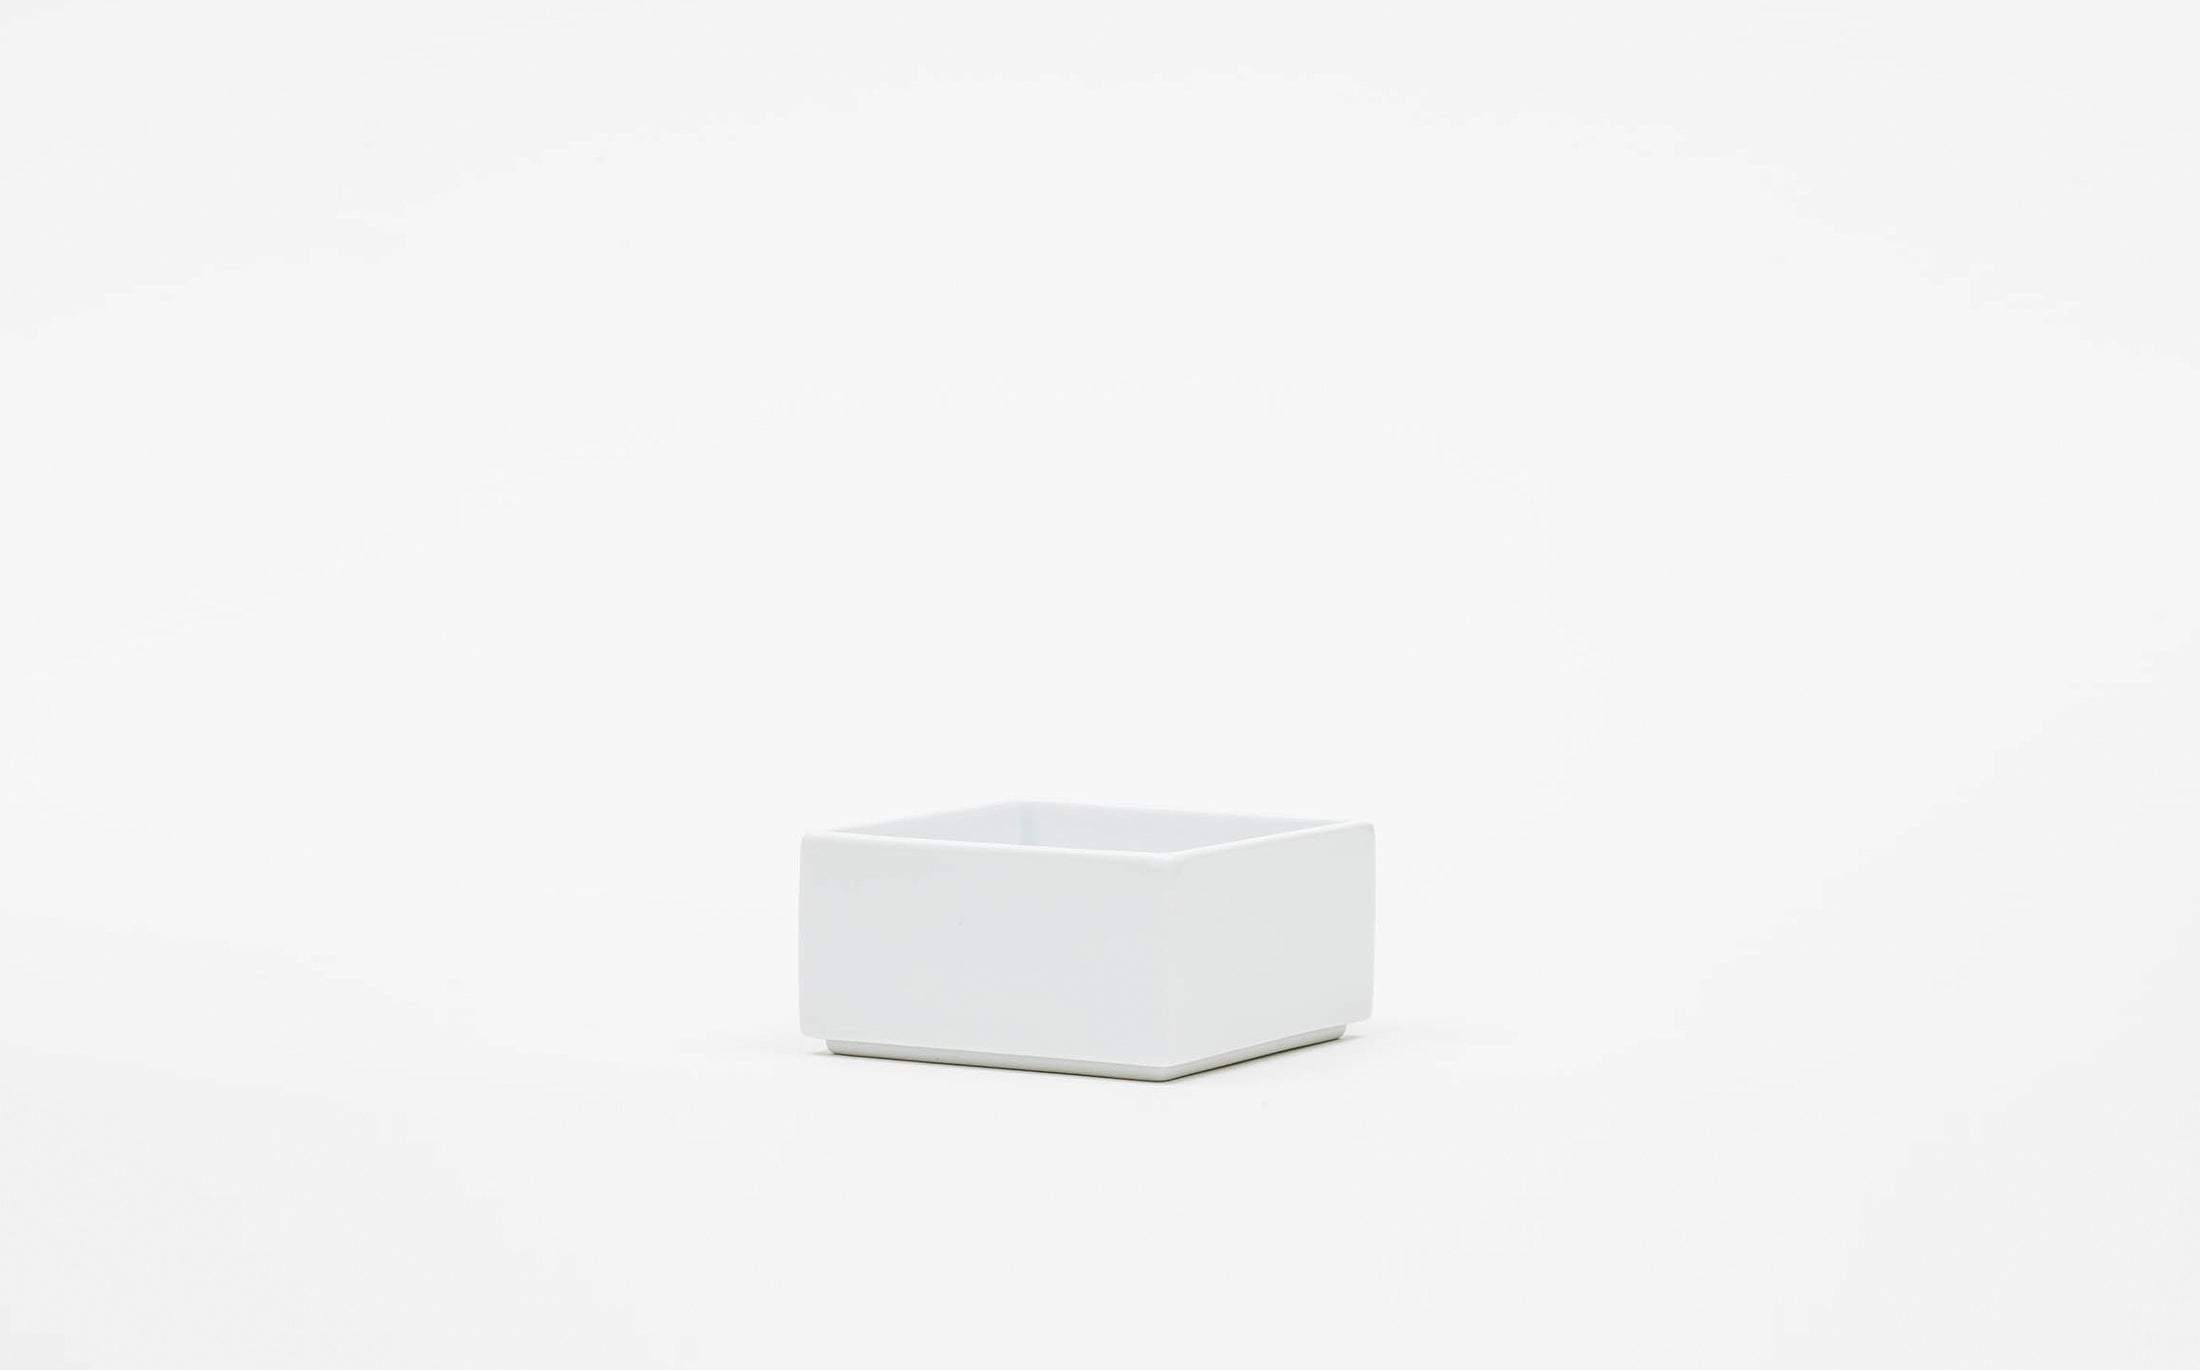 Ju-bako - Porcelain White SJu-bako - Porcelain White S #Size_square s